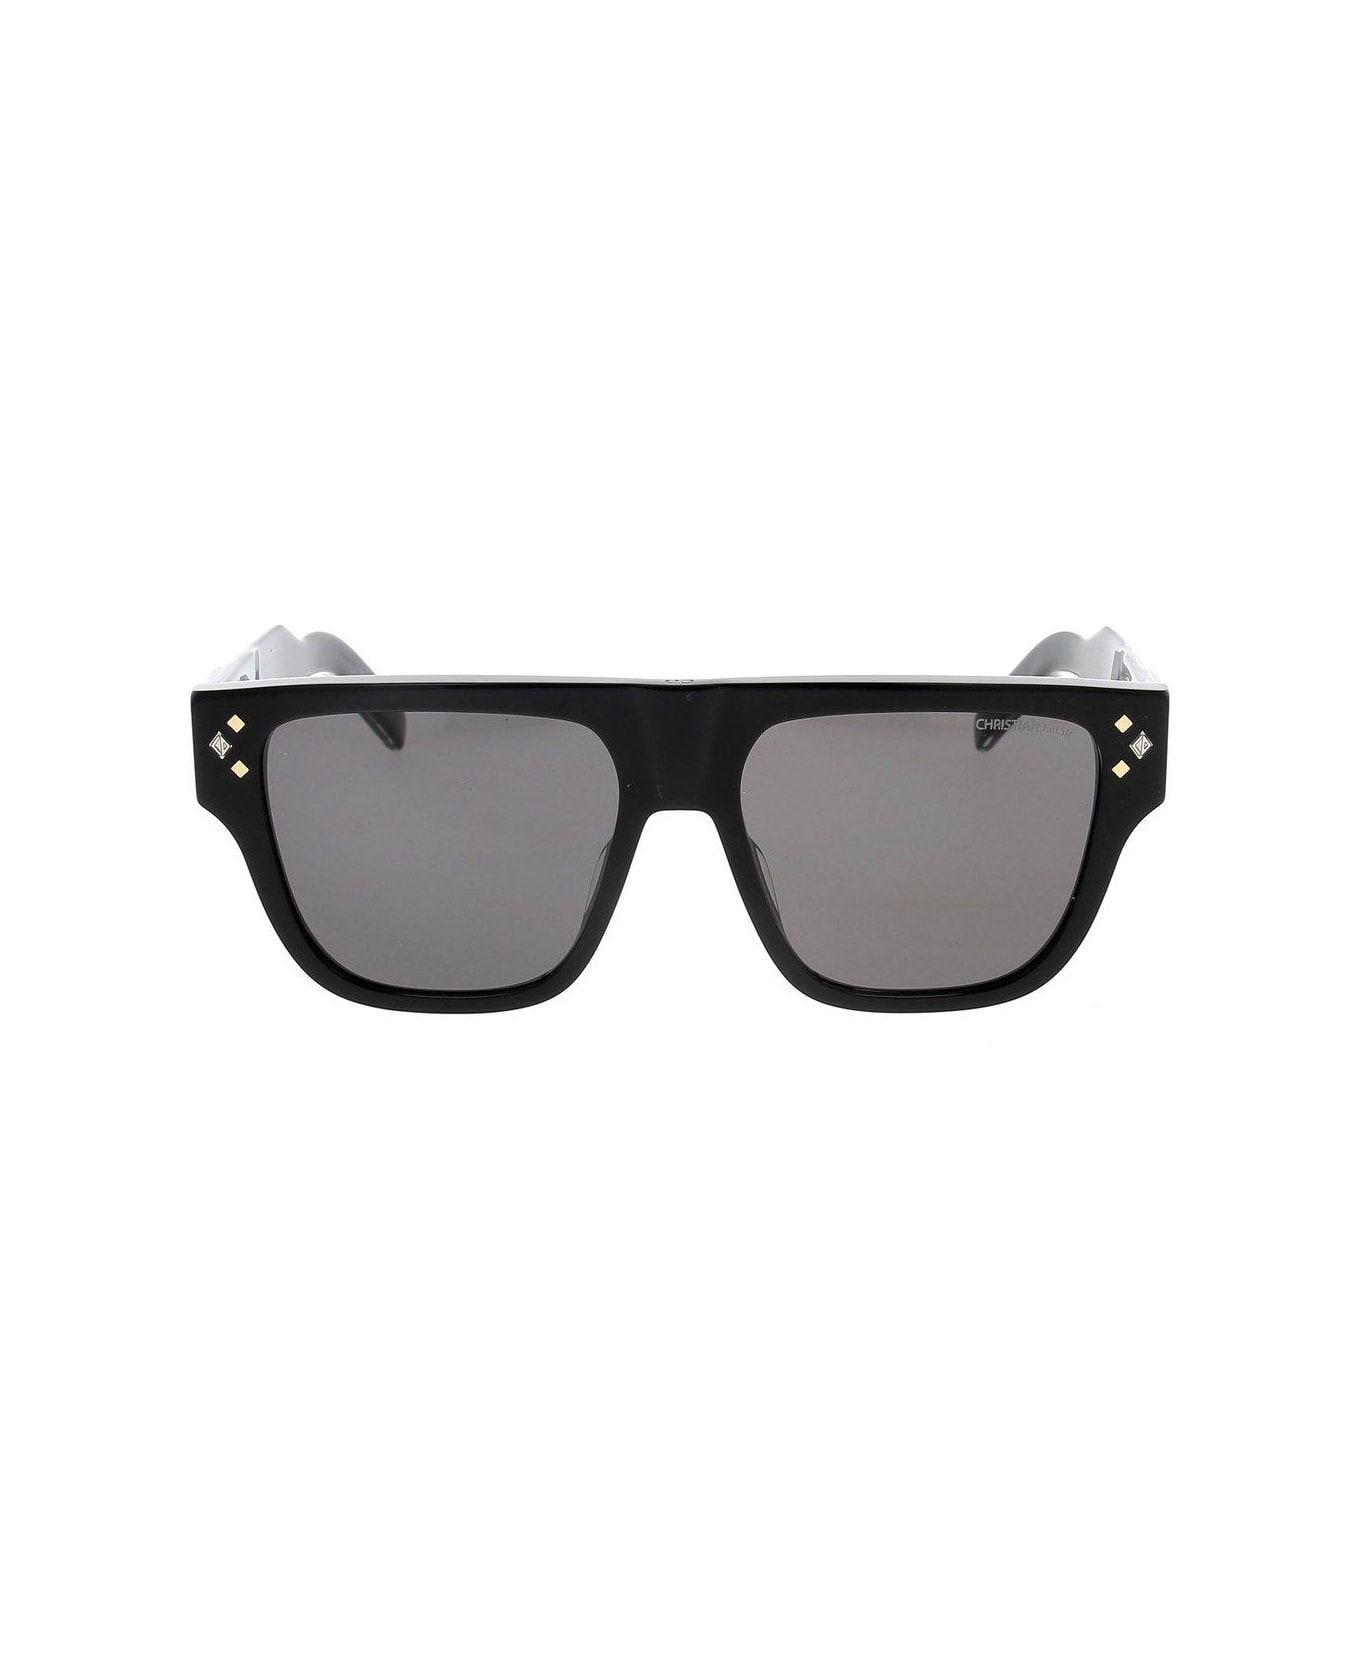 Dior Eyewear Square Frame Sunglasses - 10a0 サングラス